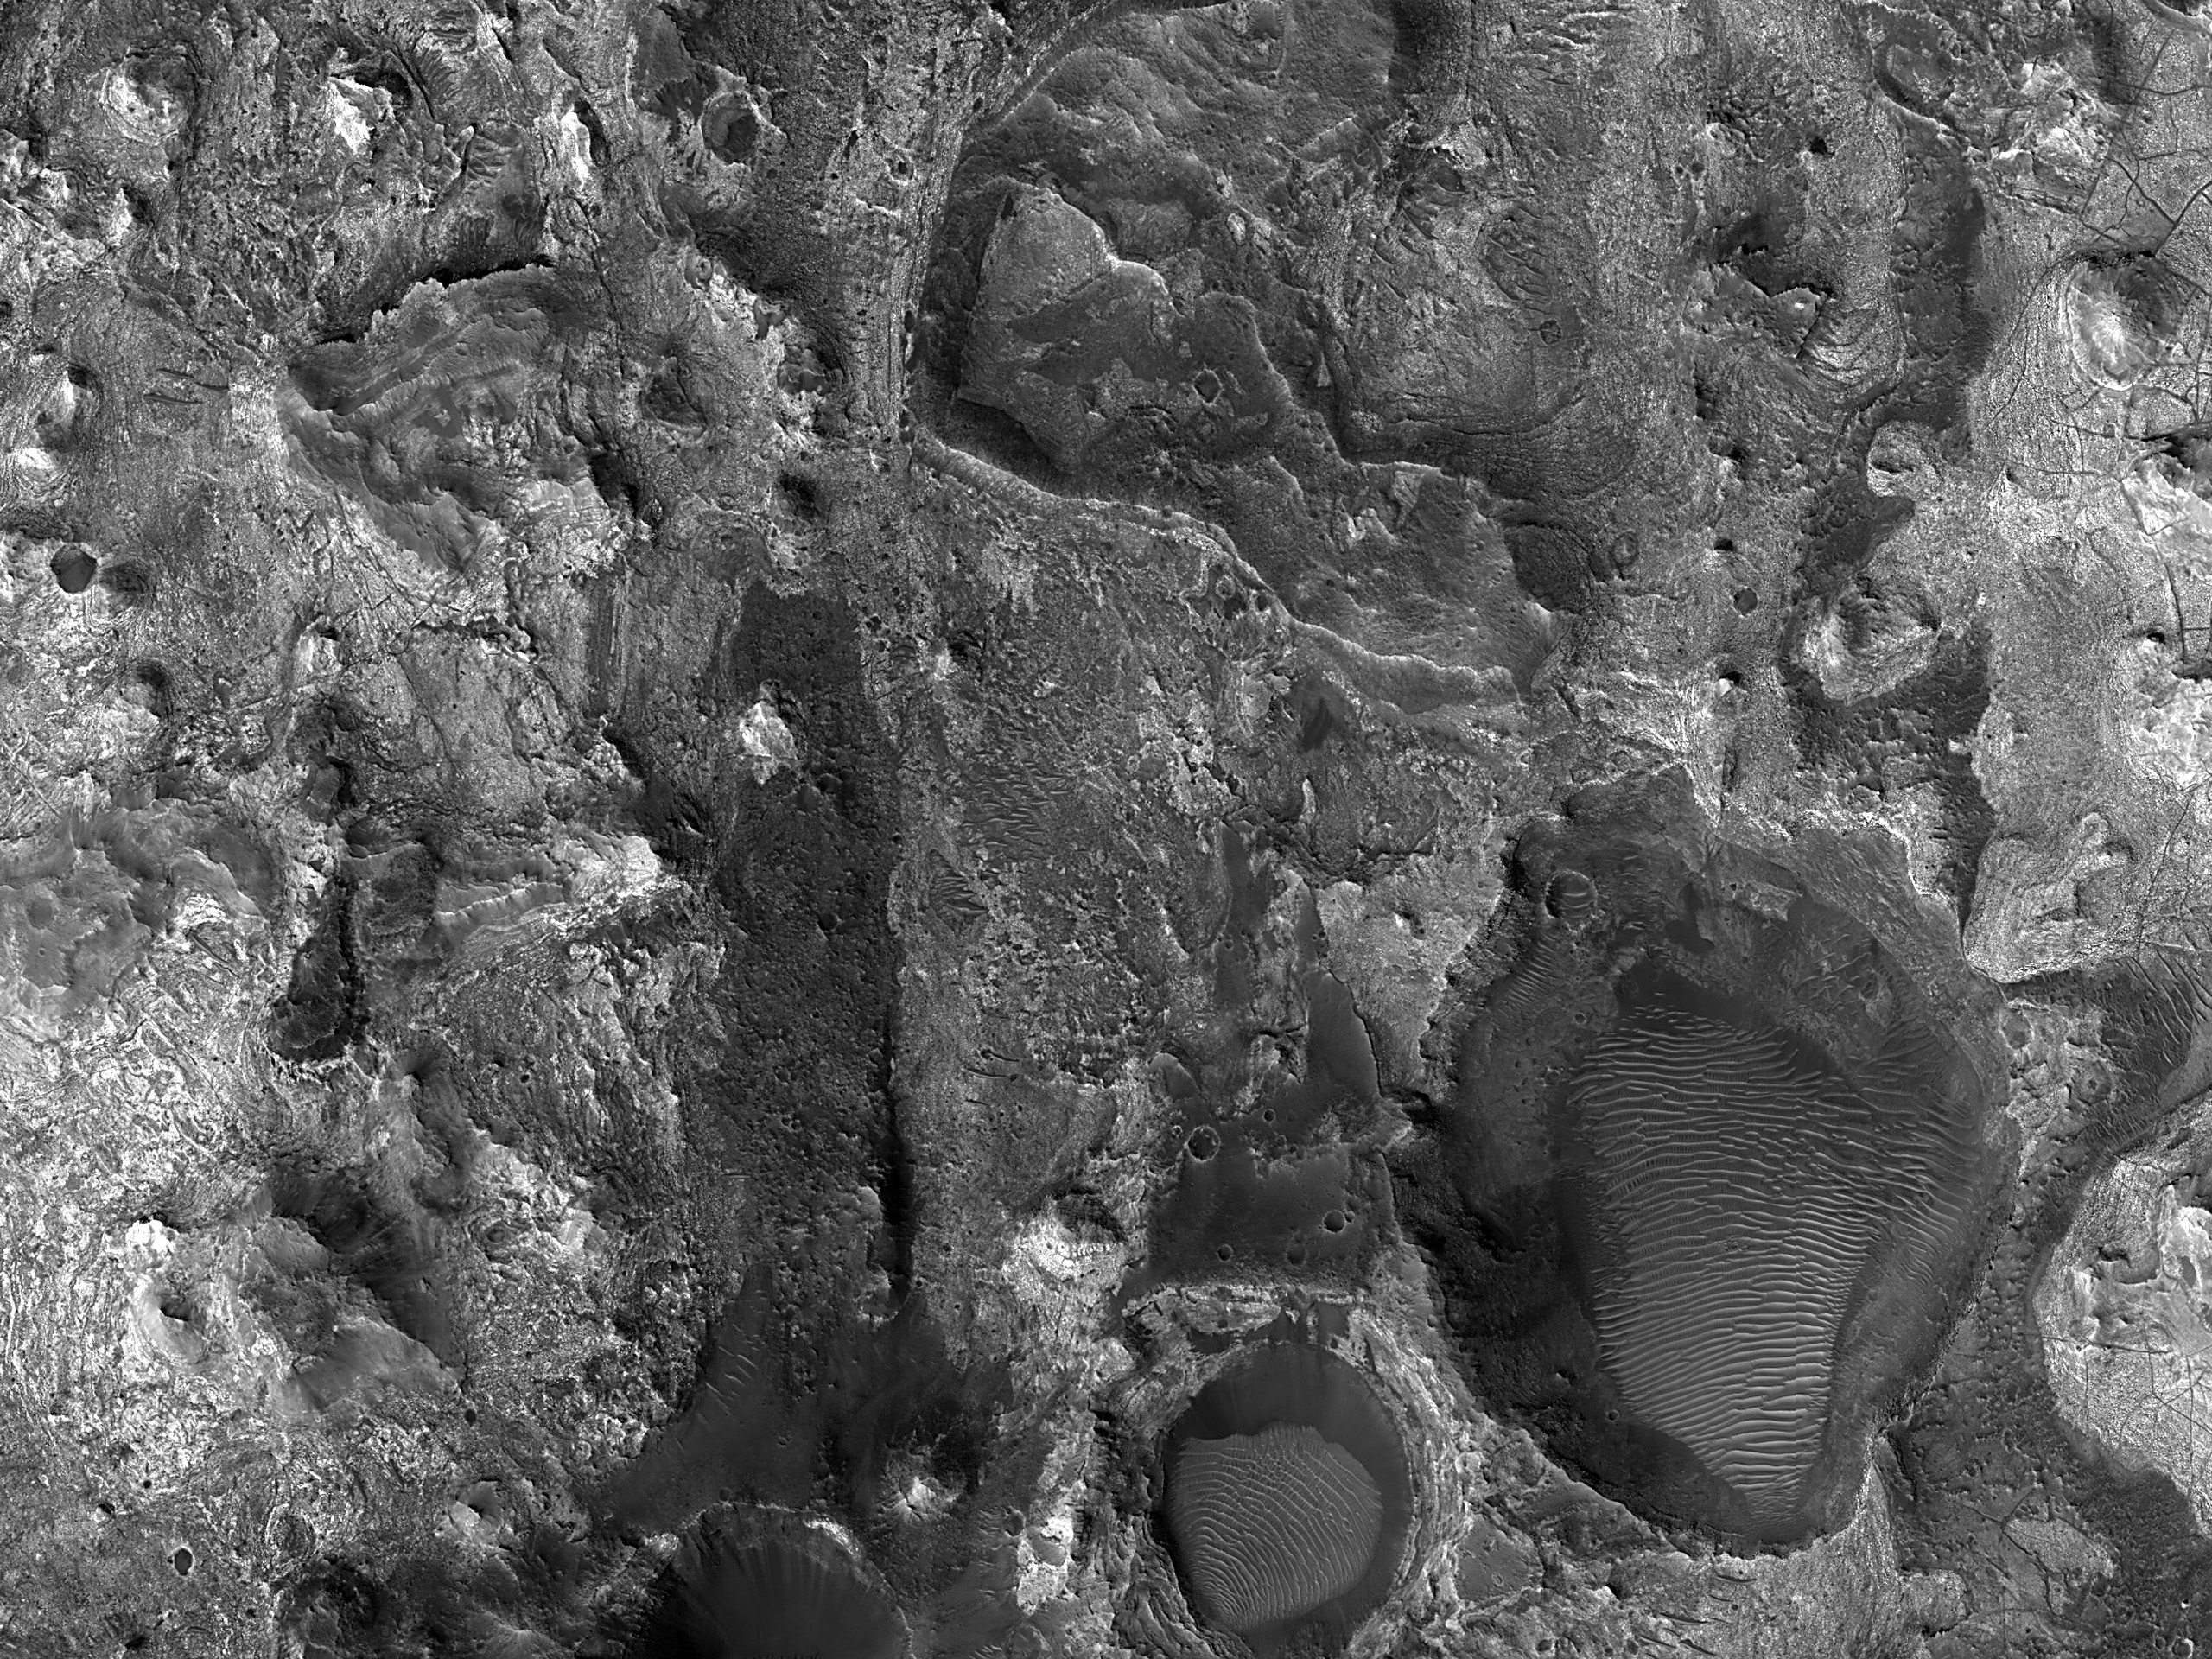 The Floor of Mawrth Vallis